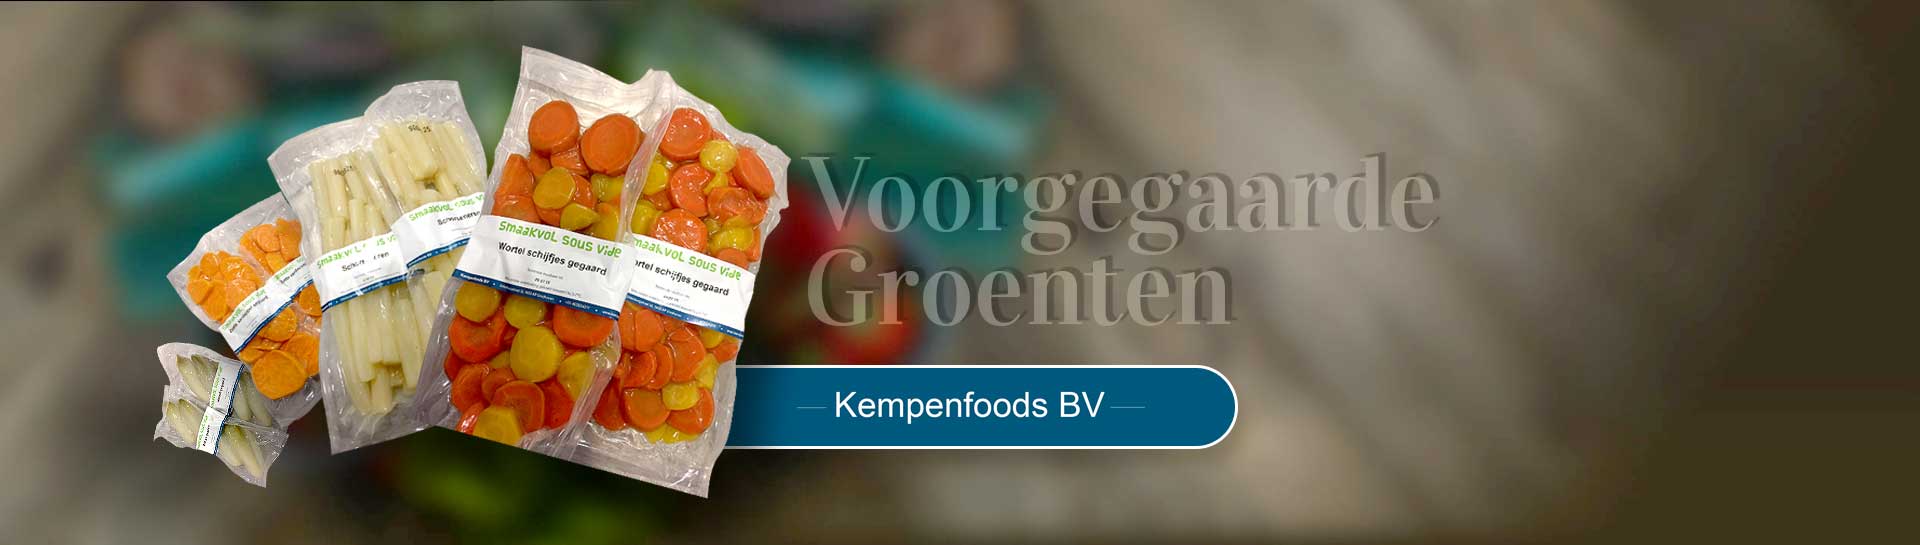 Kempenfoods bv - Voorgegaarde groenten